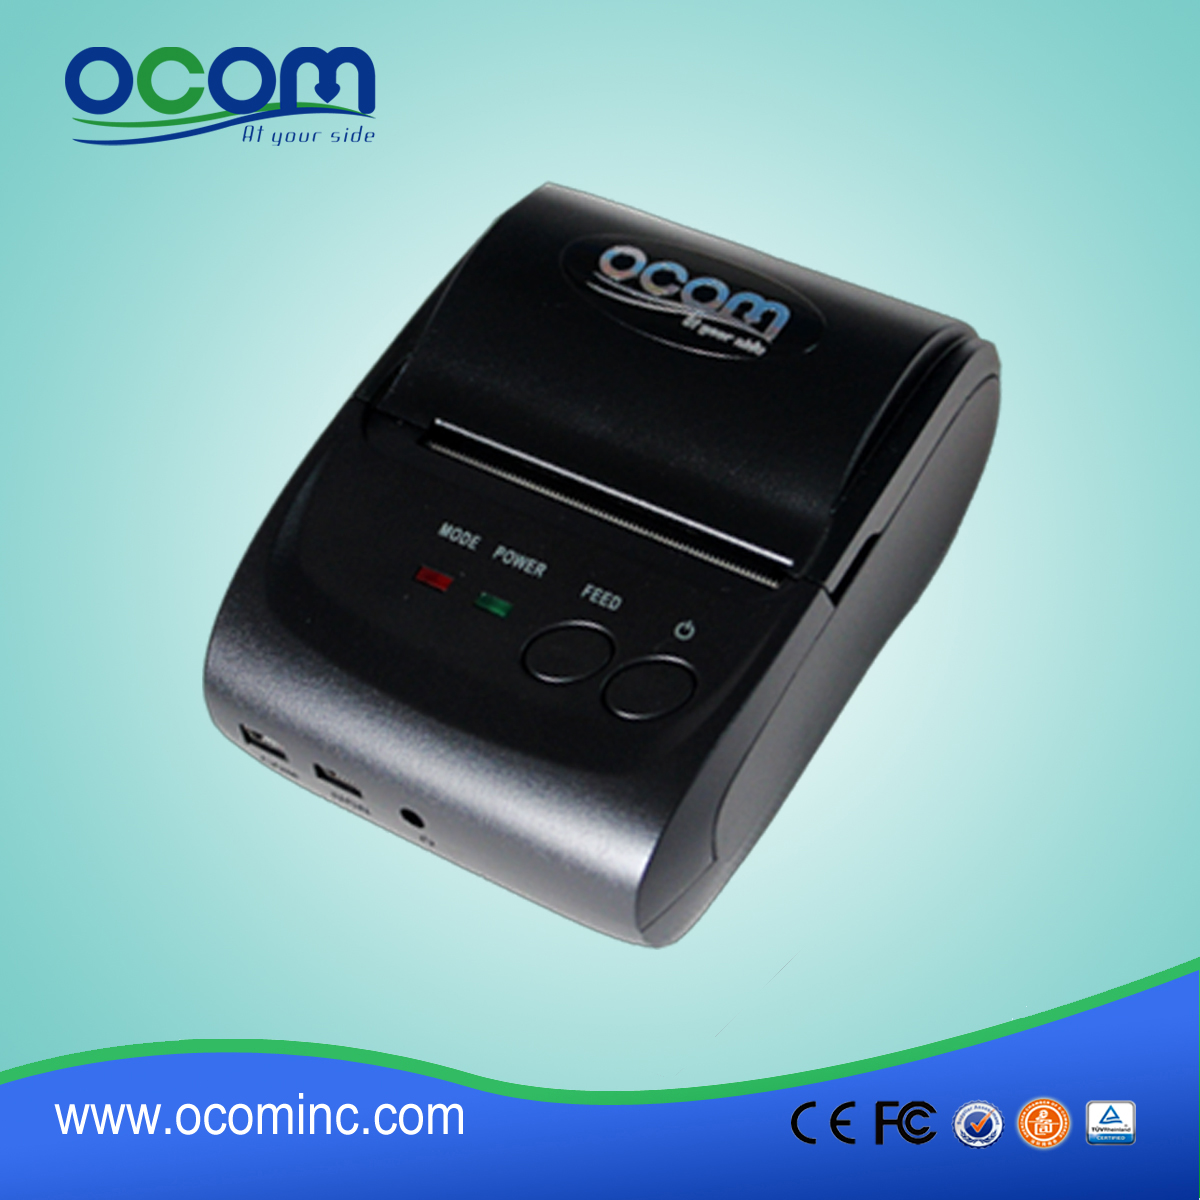 Imprimante thermique portative OCPP-M05 58mm